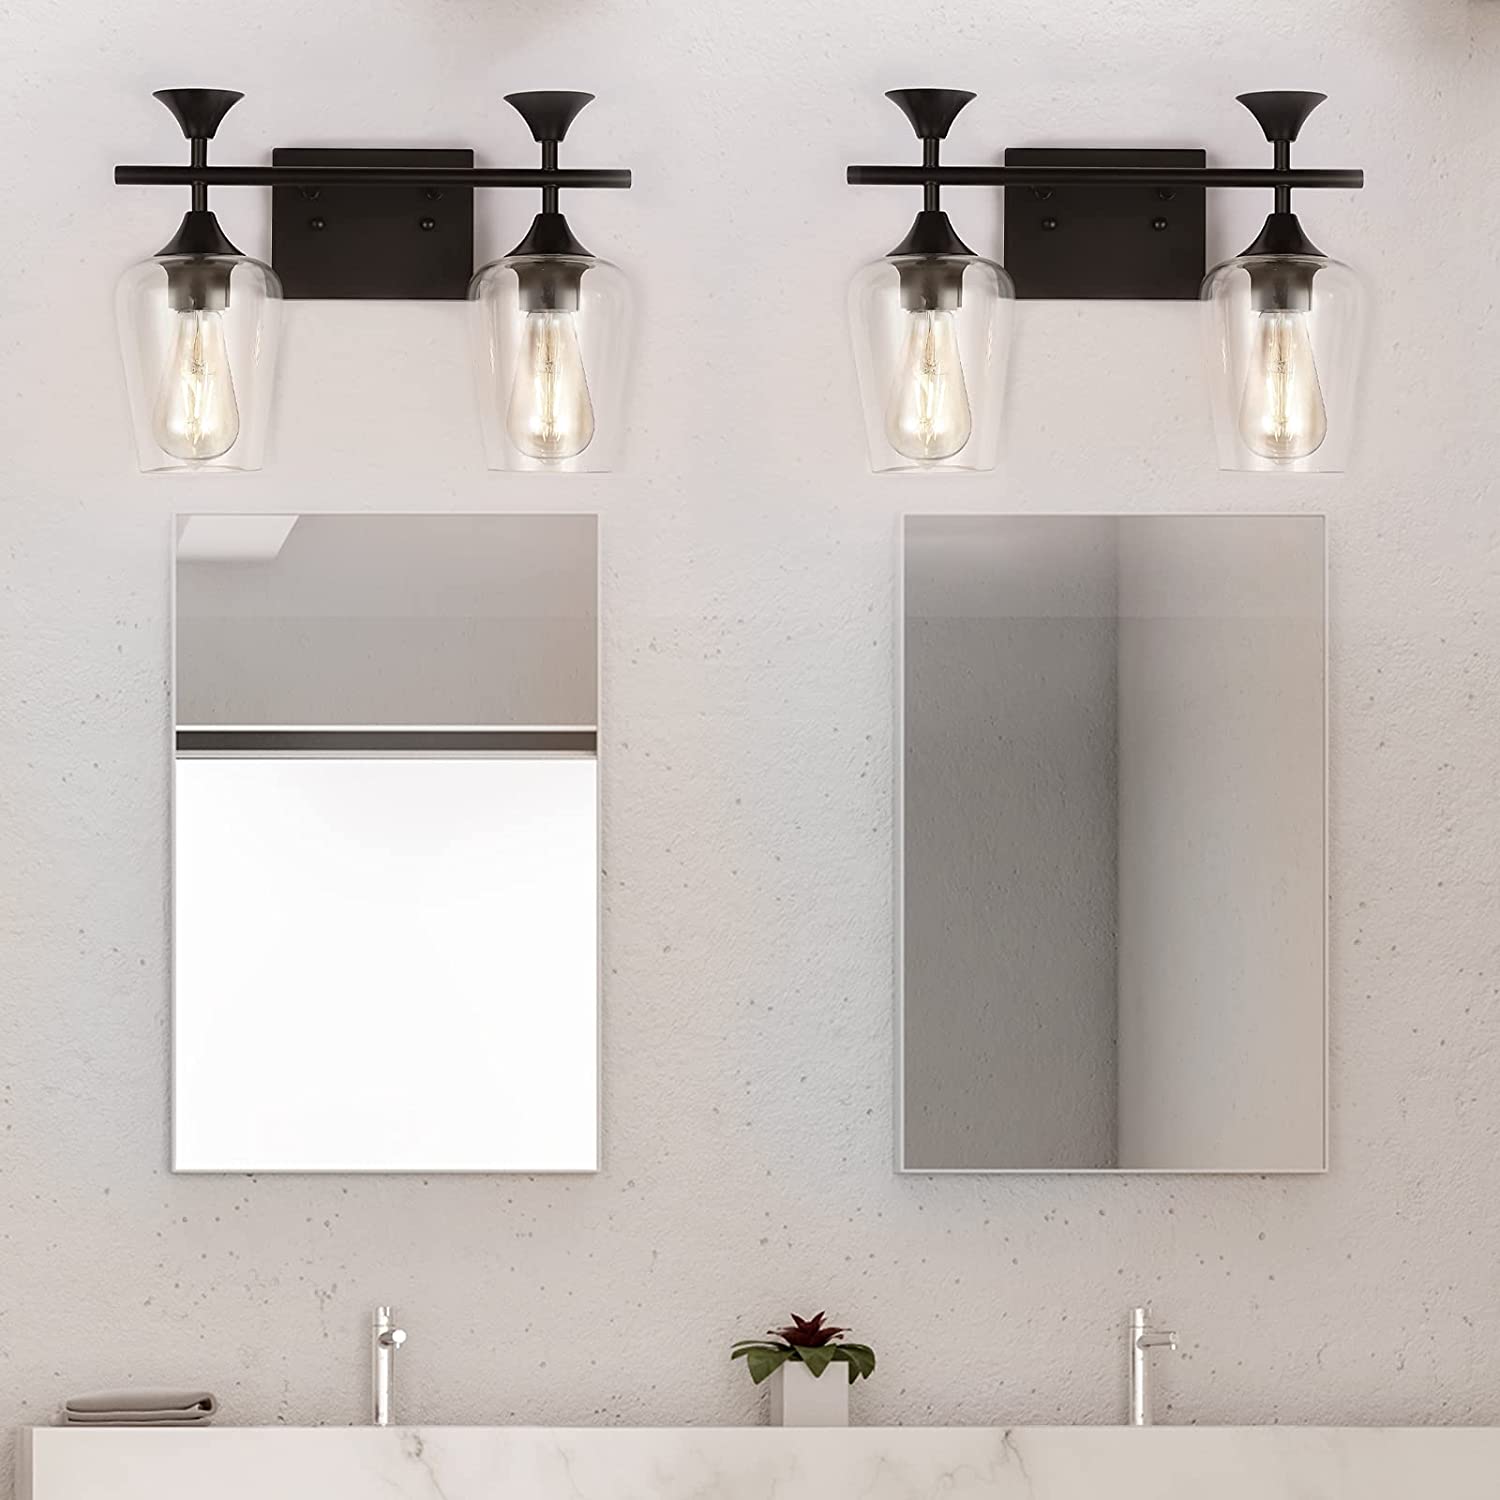 2 light black bathroom wall lighting industrial glass wall sconce fixture